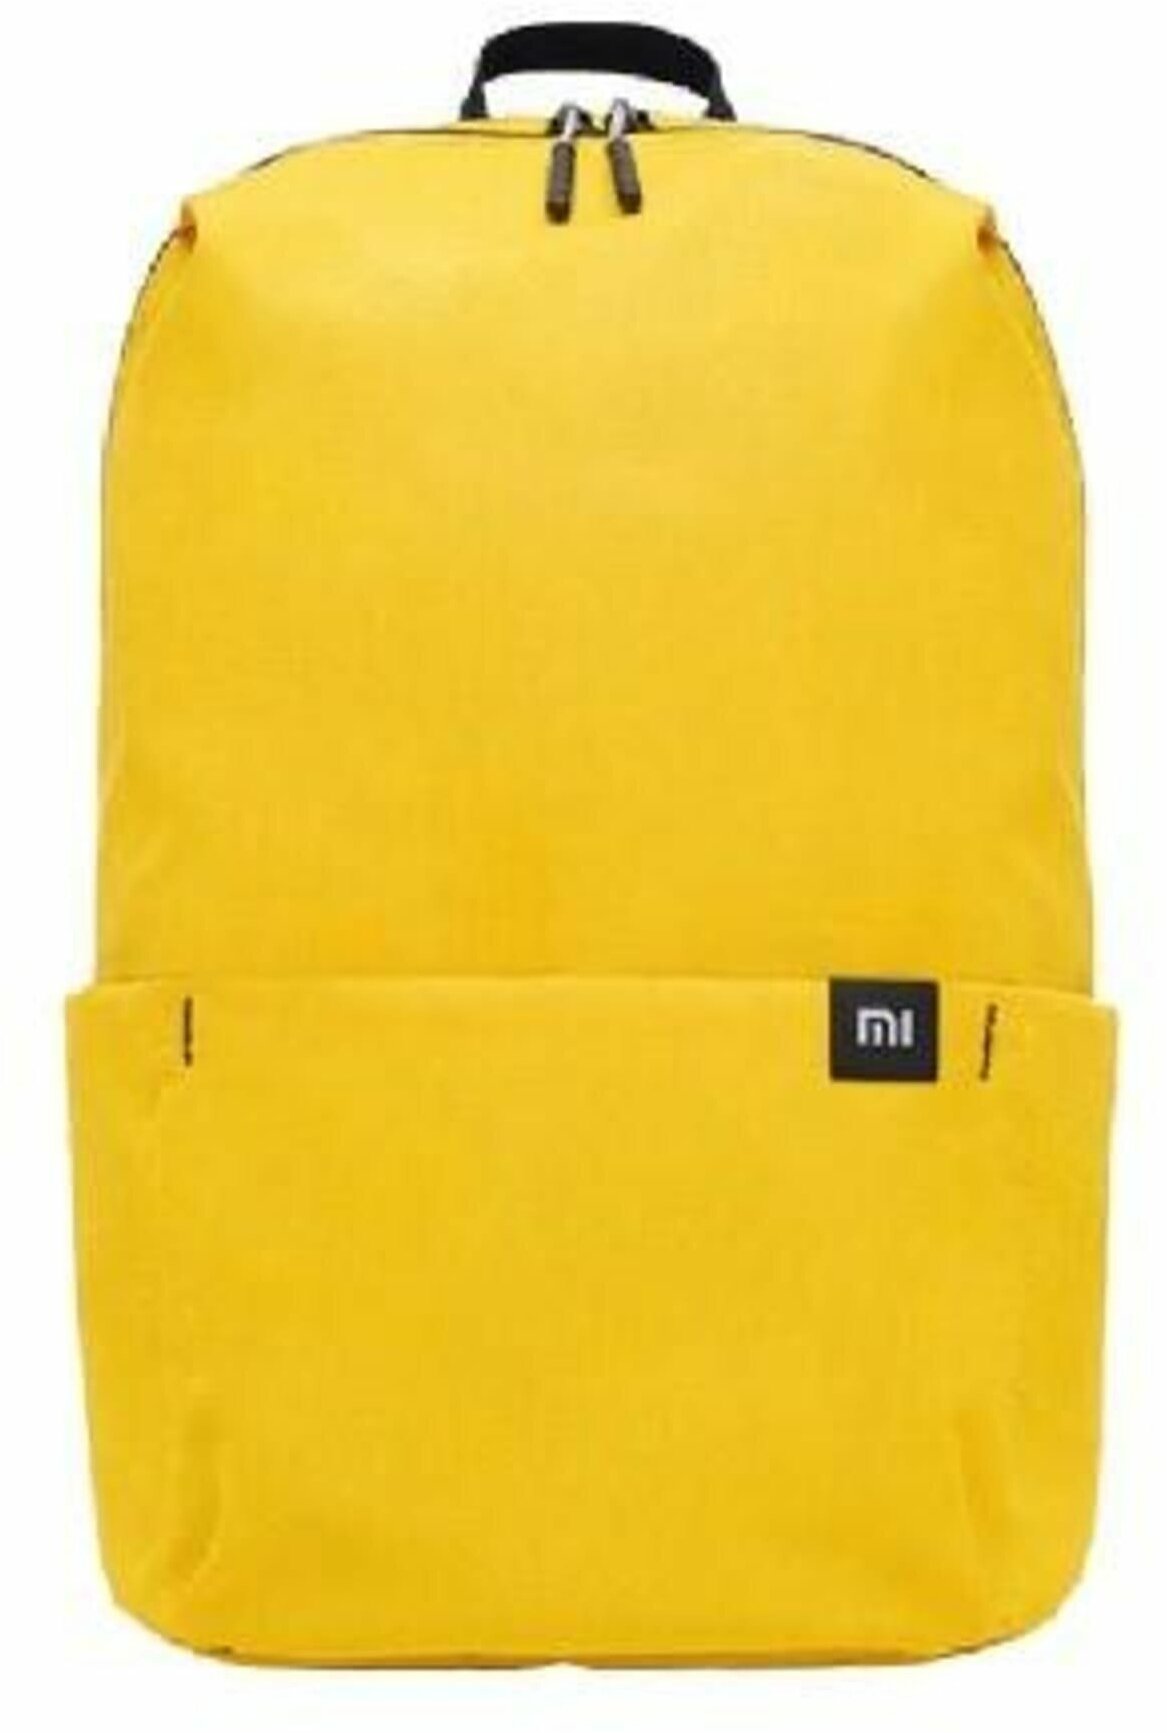 Рюкзак Xiaomi Mi Colorful Mini 10л